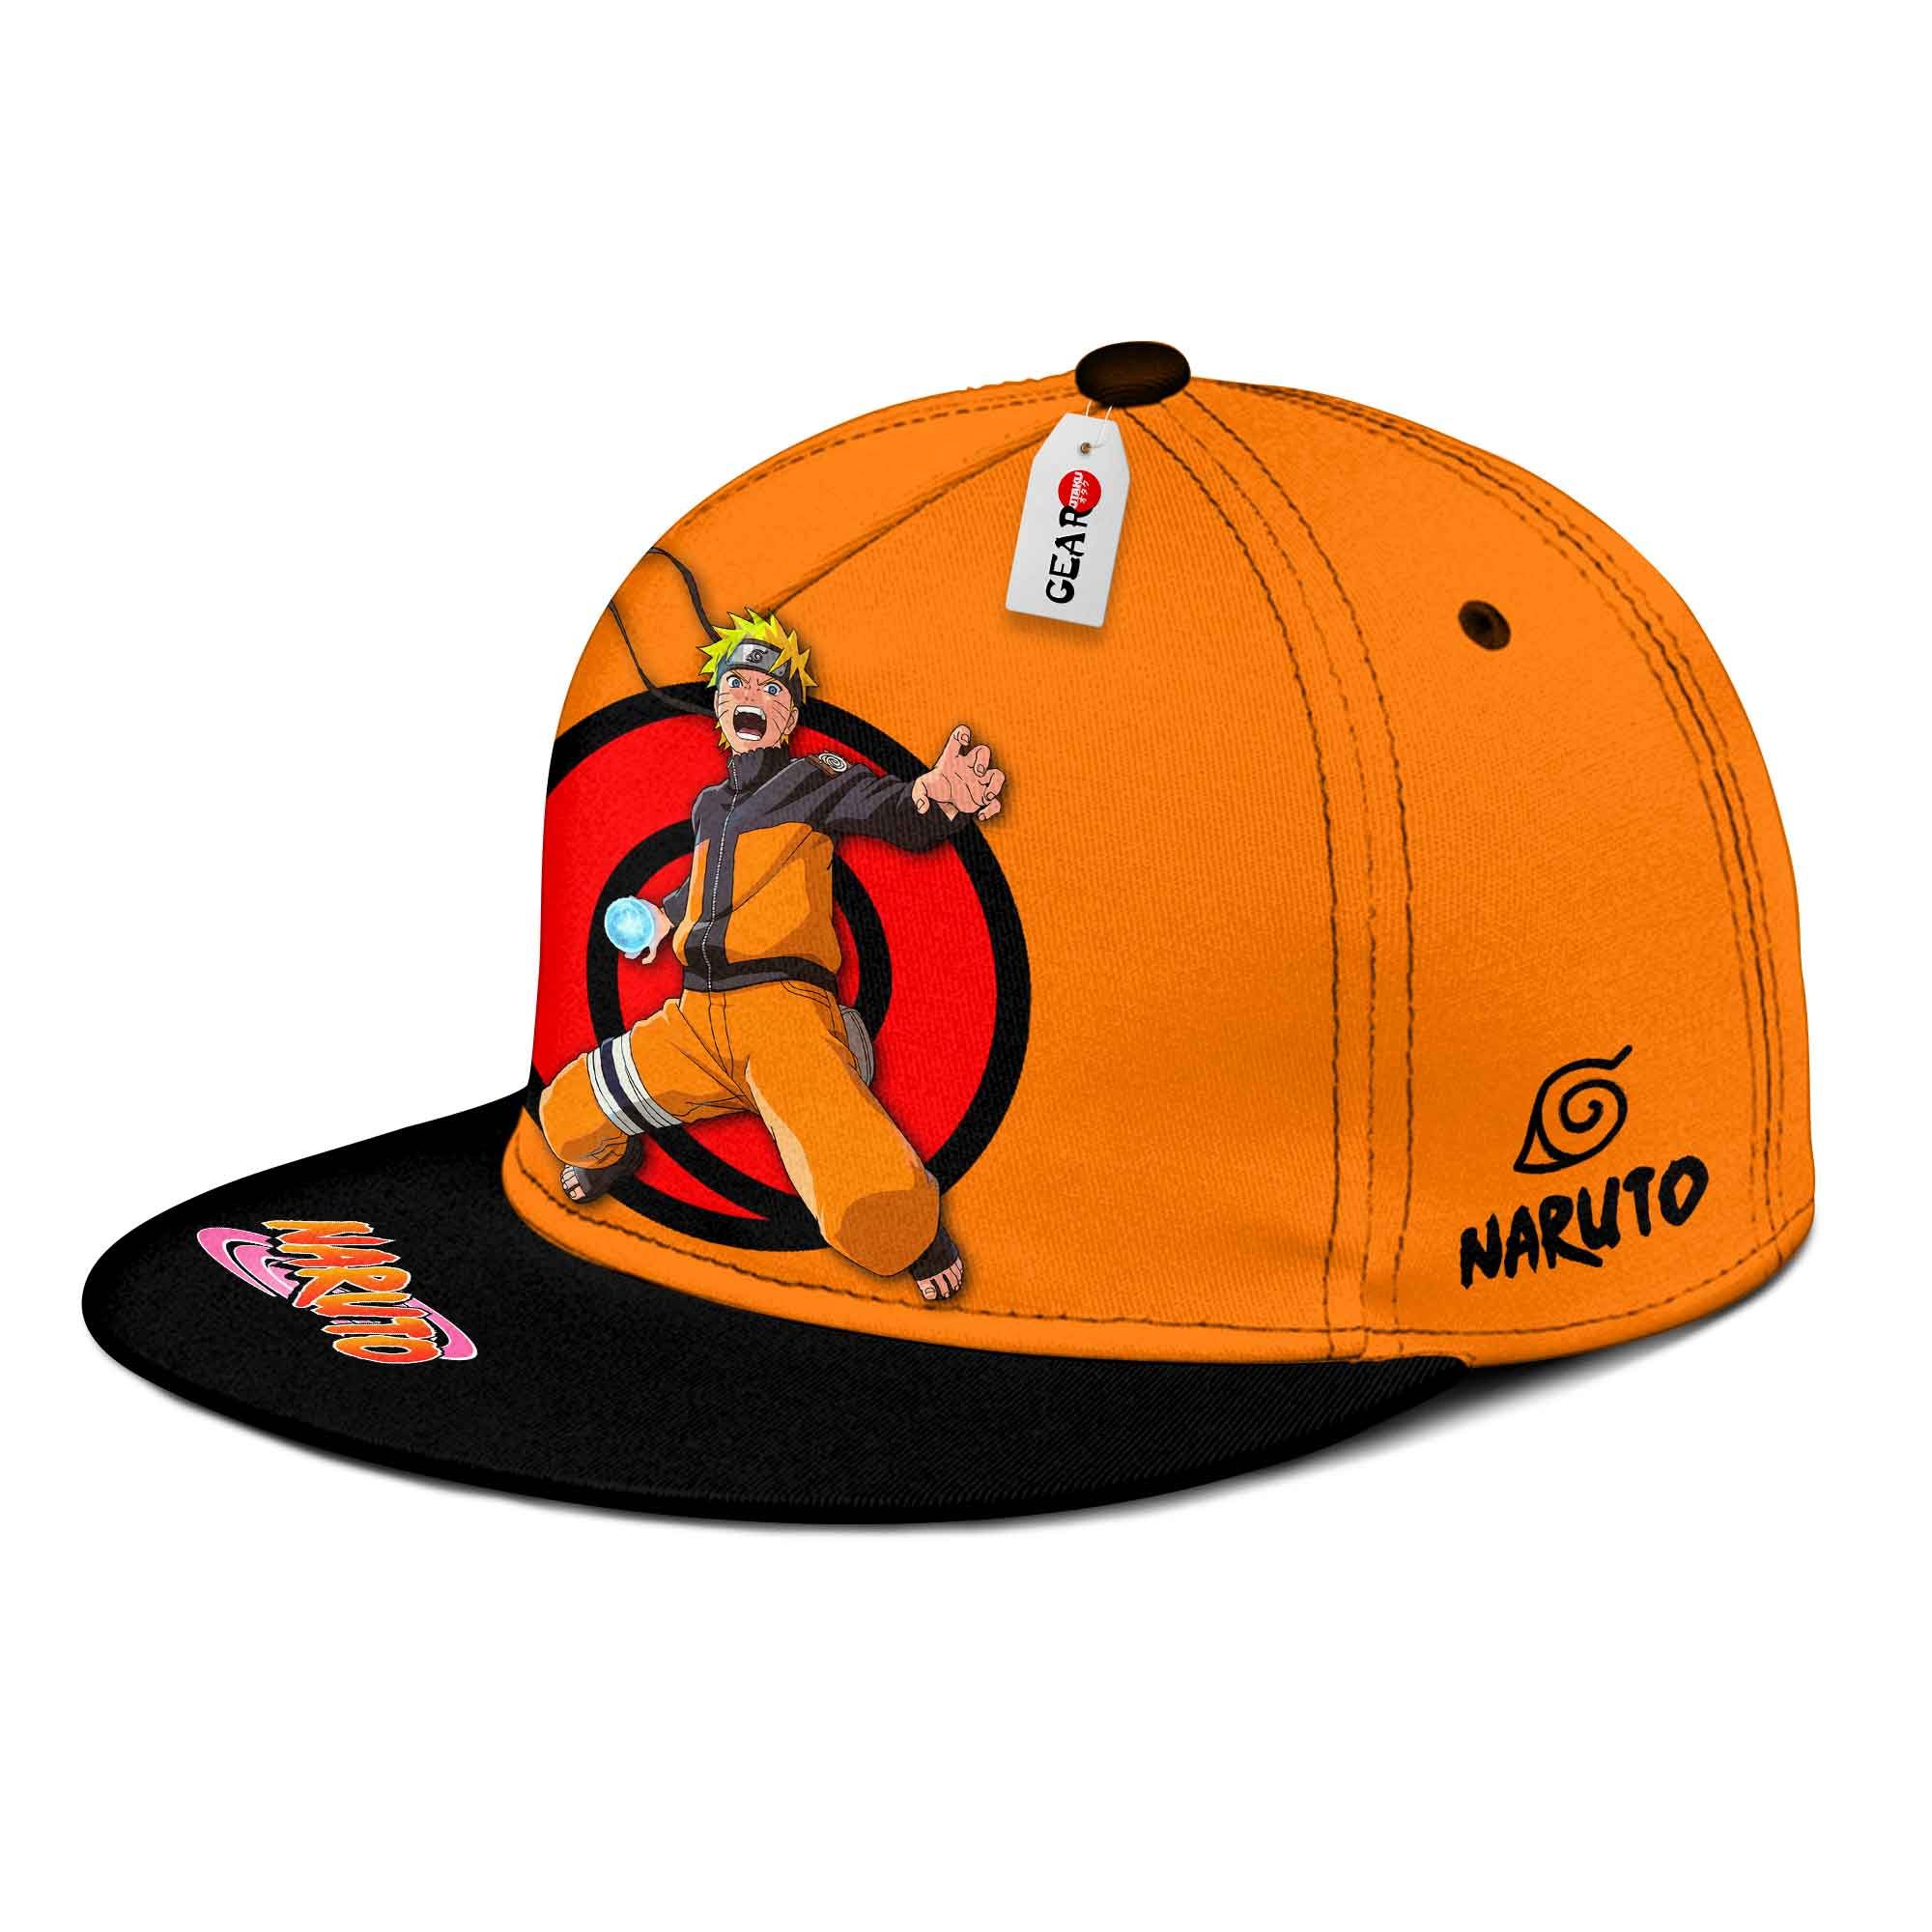 NEW NRT NRT Cap hat2